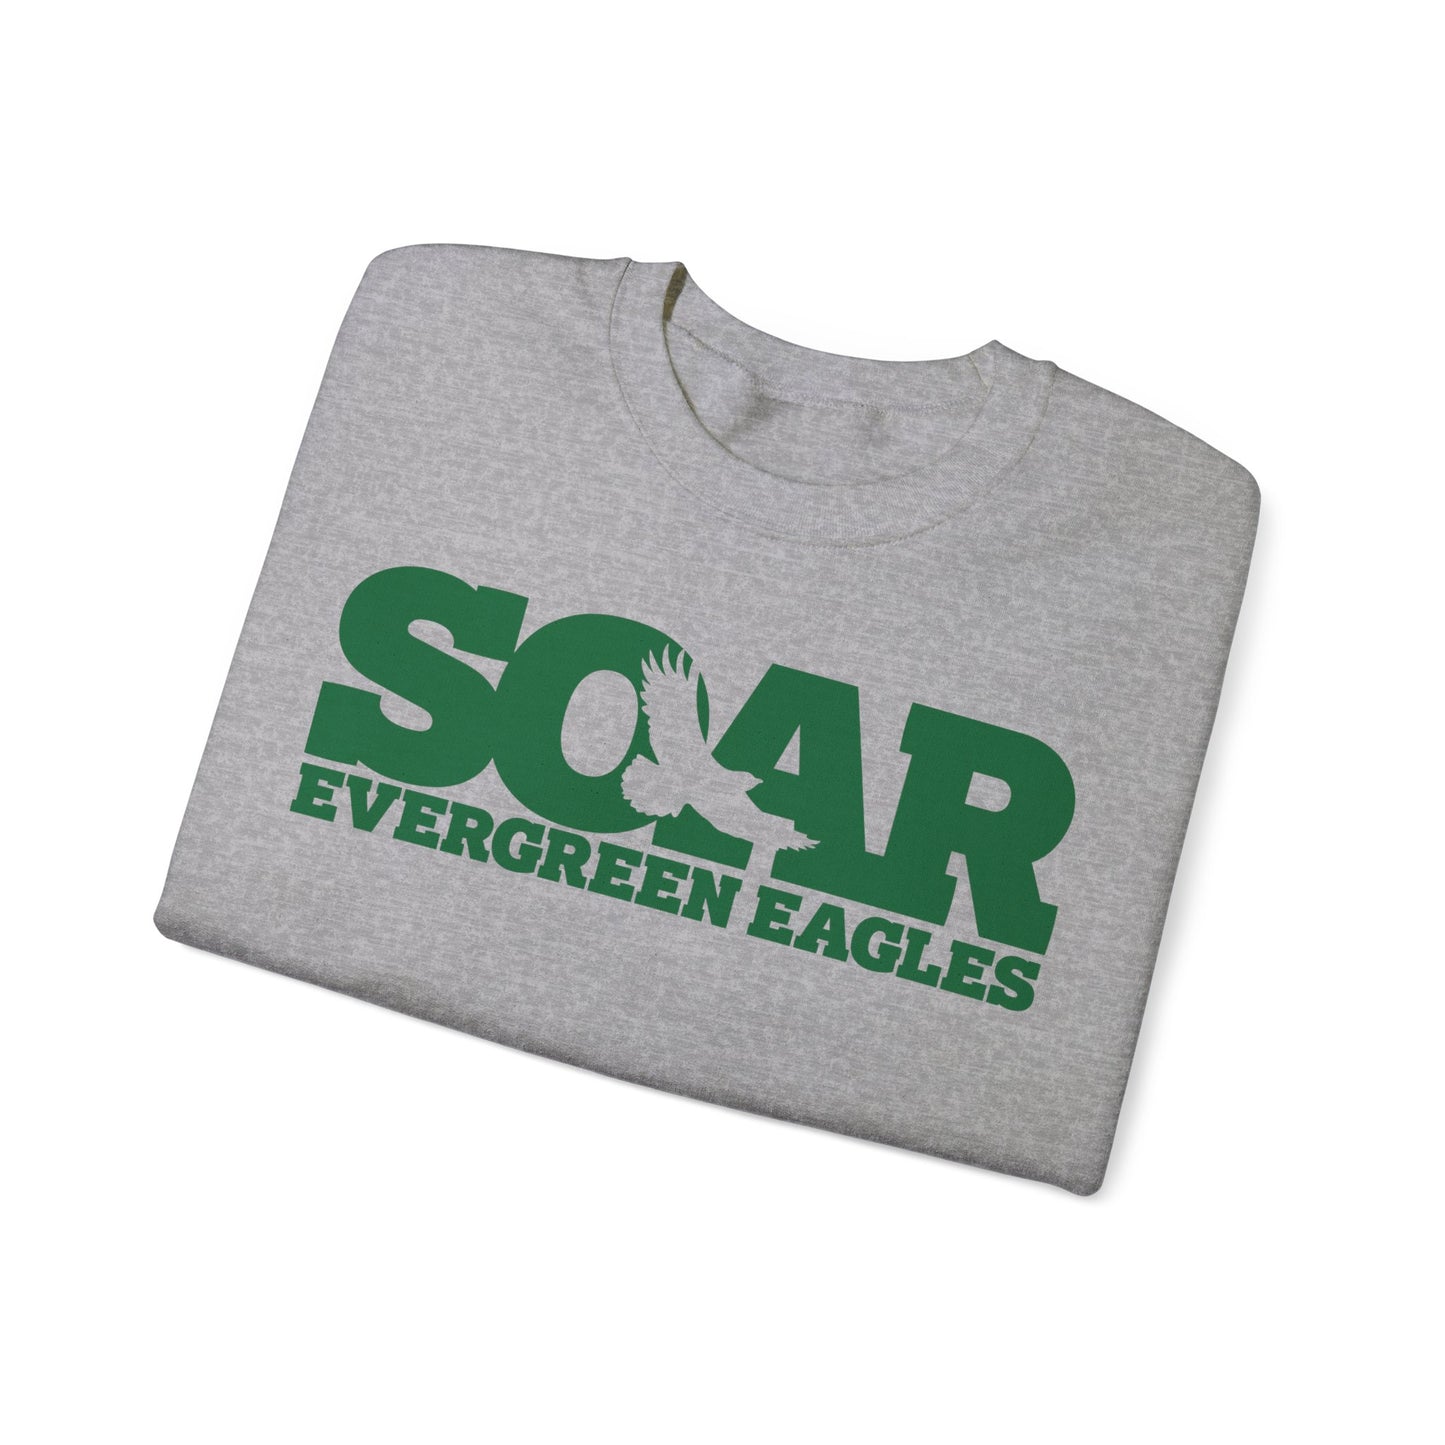 SOAR Evergreen Elementary Crewneck - Adult